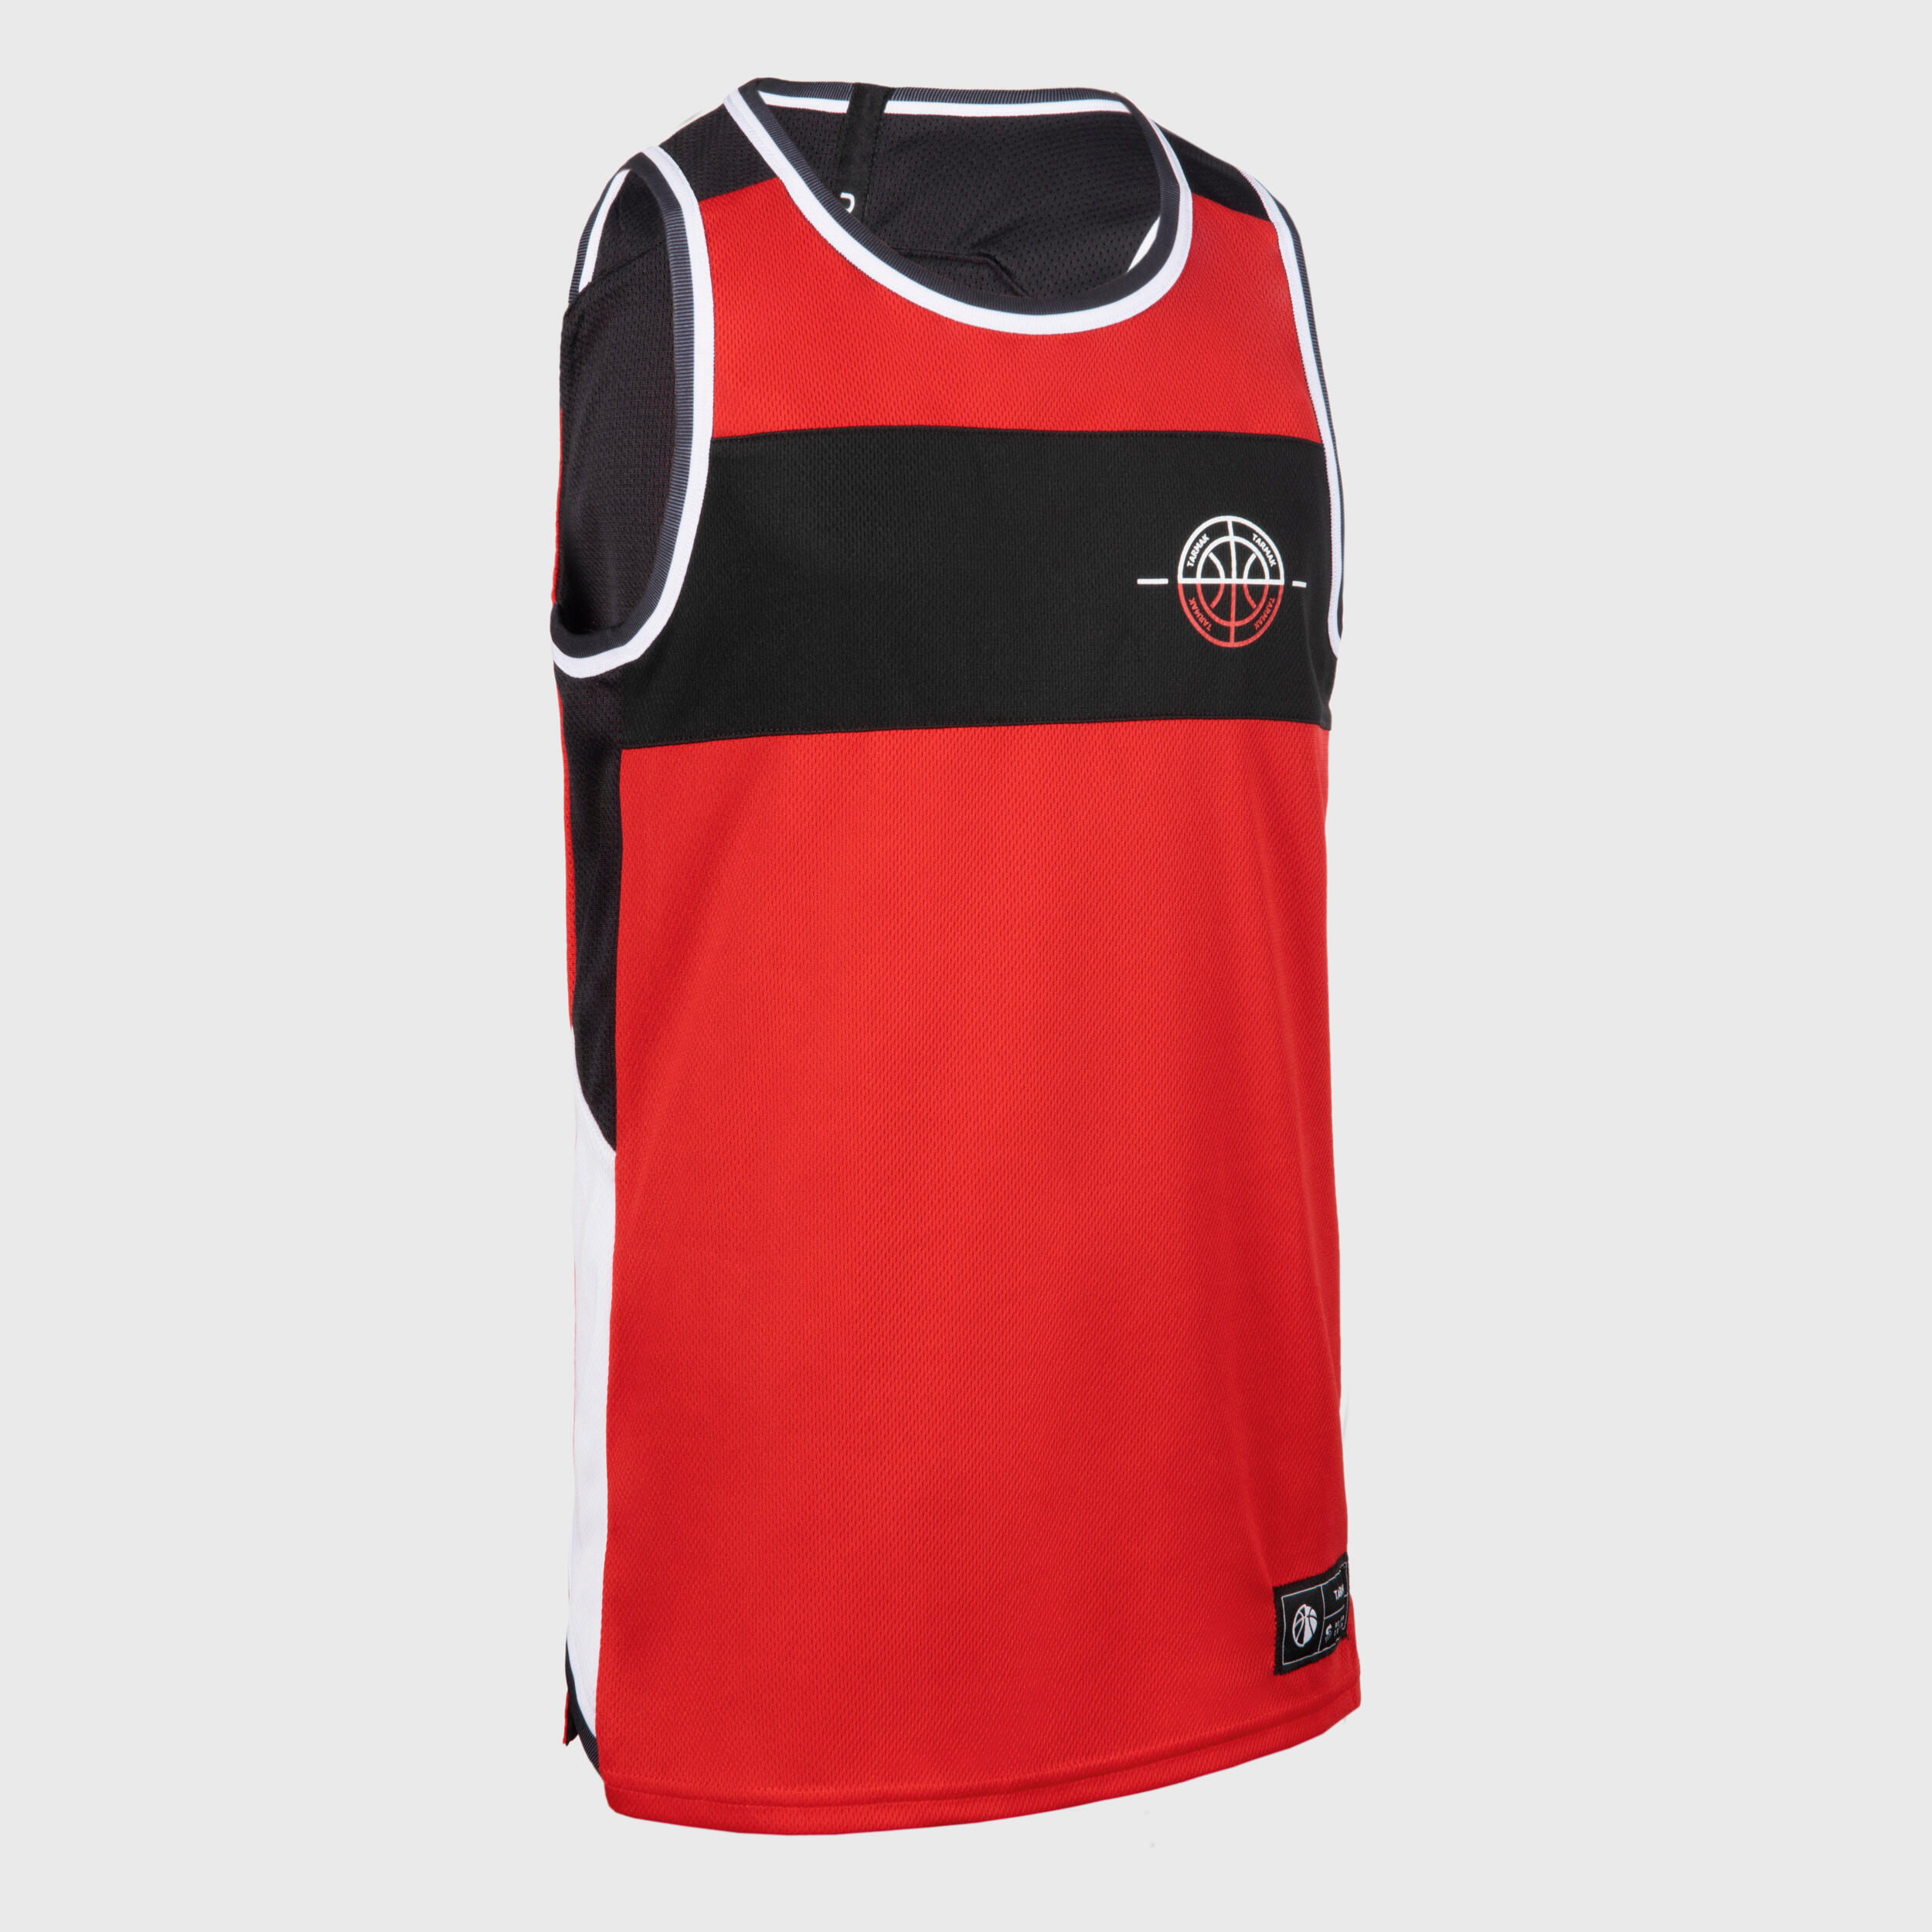 Kids' Reversible Sleeveless Basketball Jersey T500R - Red/Black 9/11